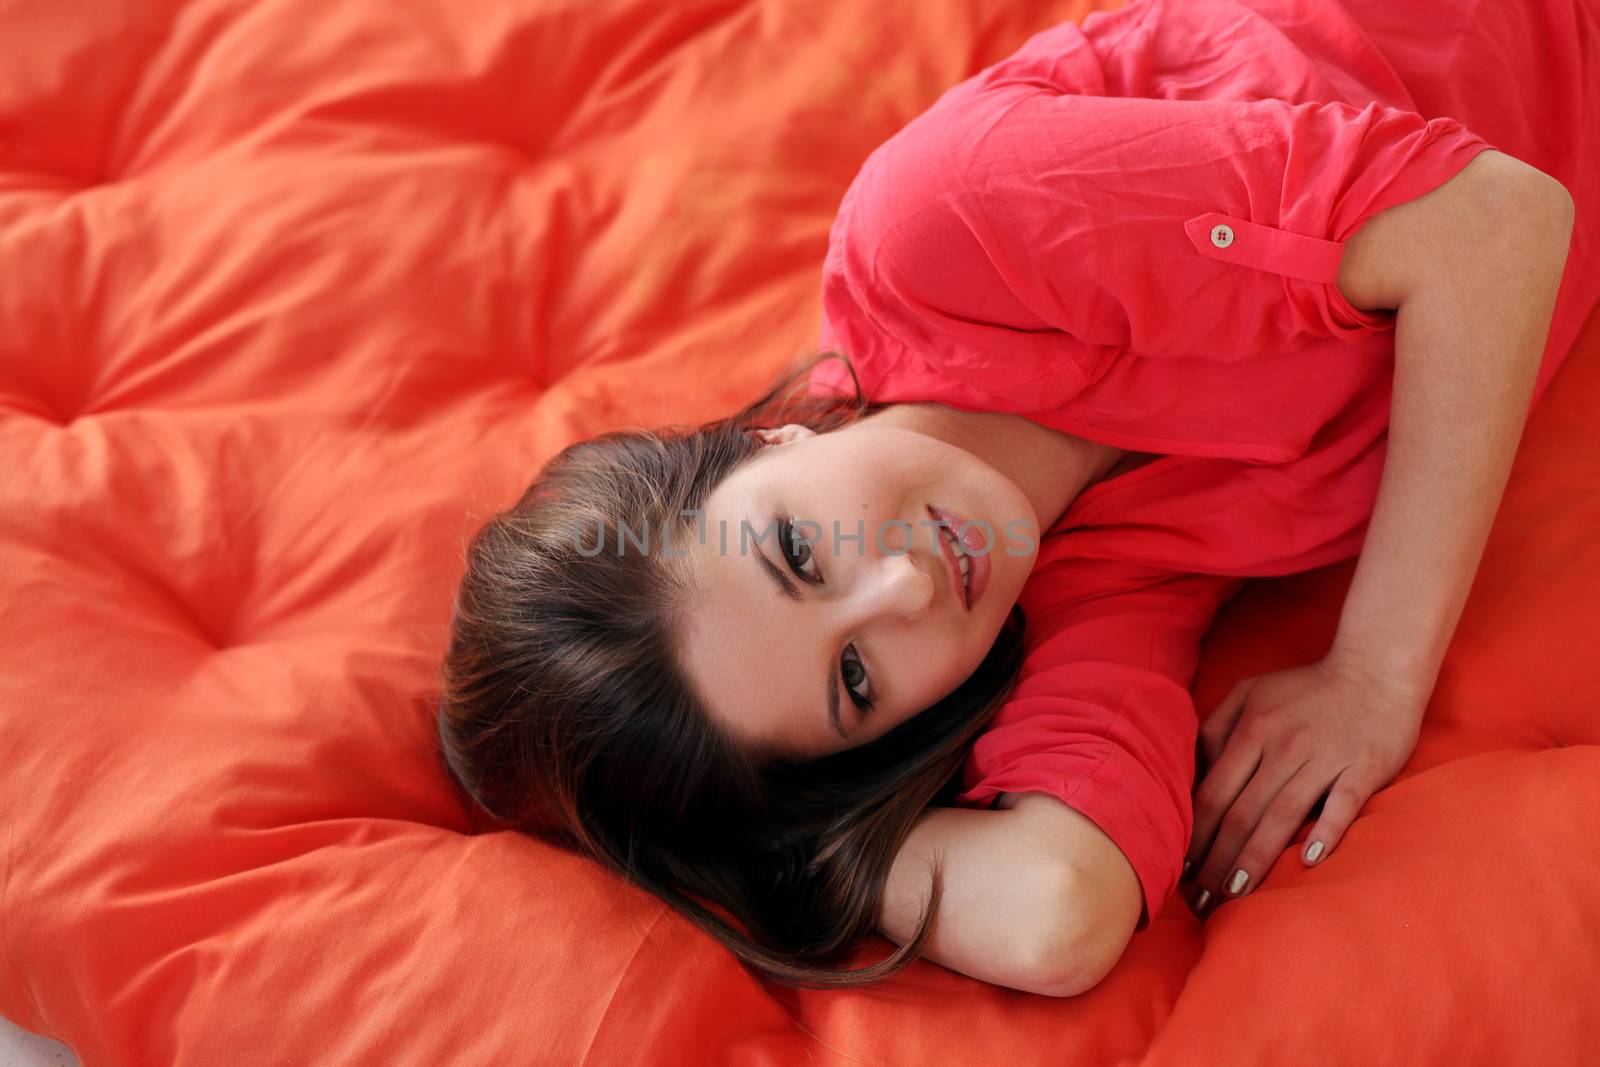 Sensual young woman dreaming on a blanket by rufatjumali